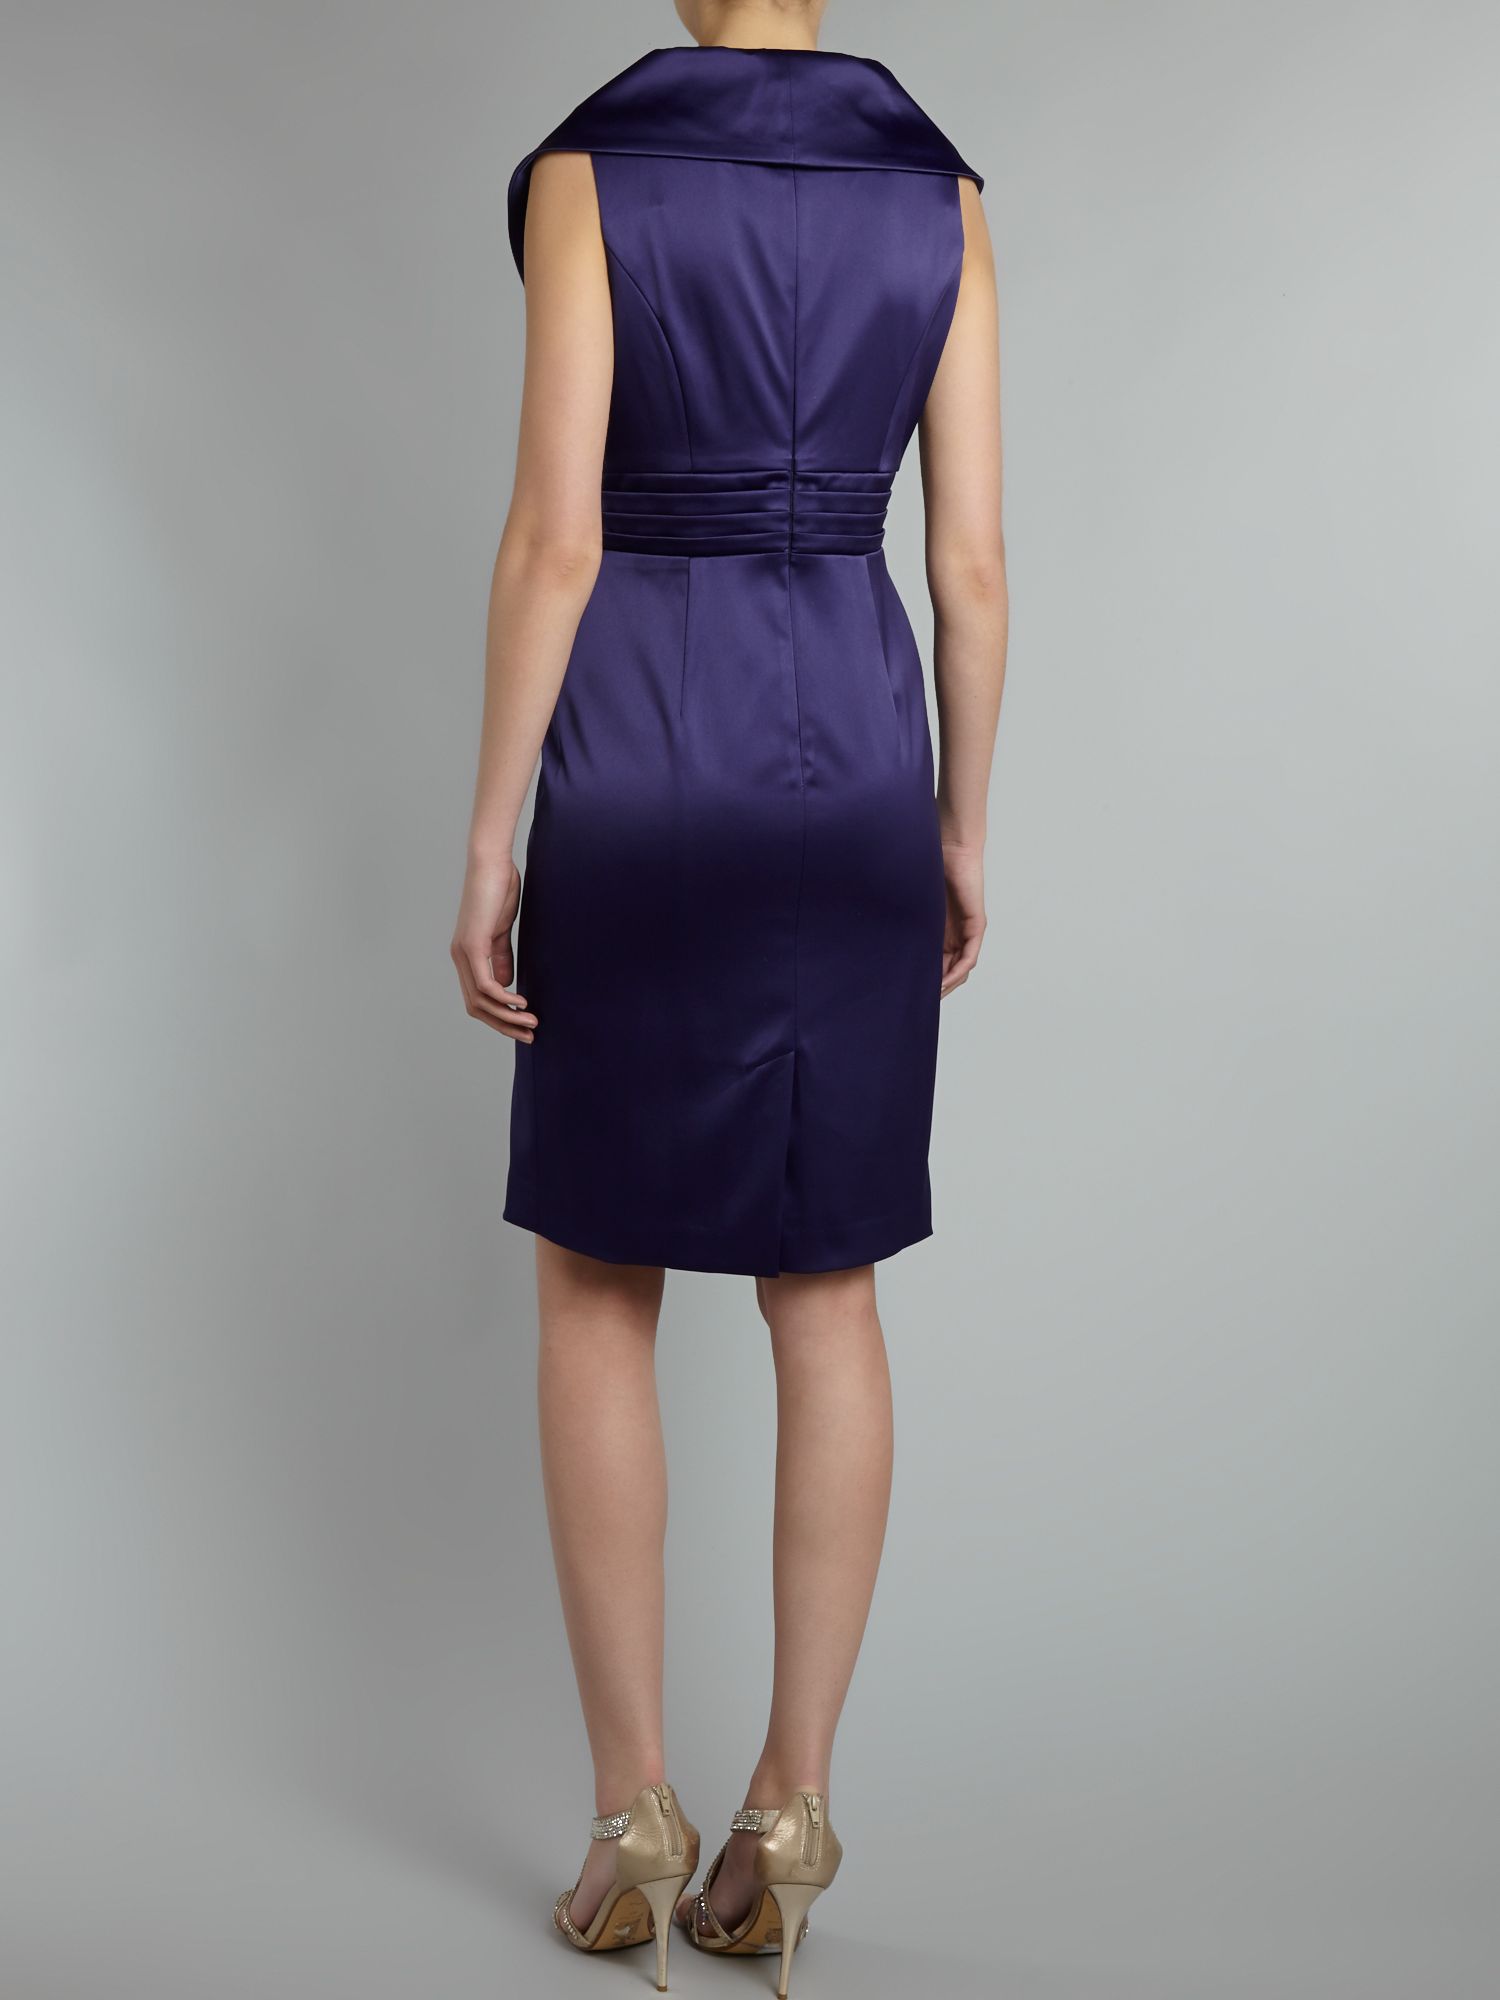 Eliza j Portrait Collar Satin Shift Dress in Purple | Lyst